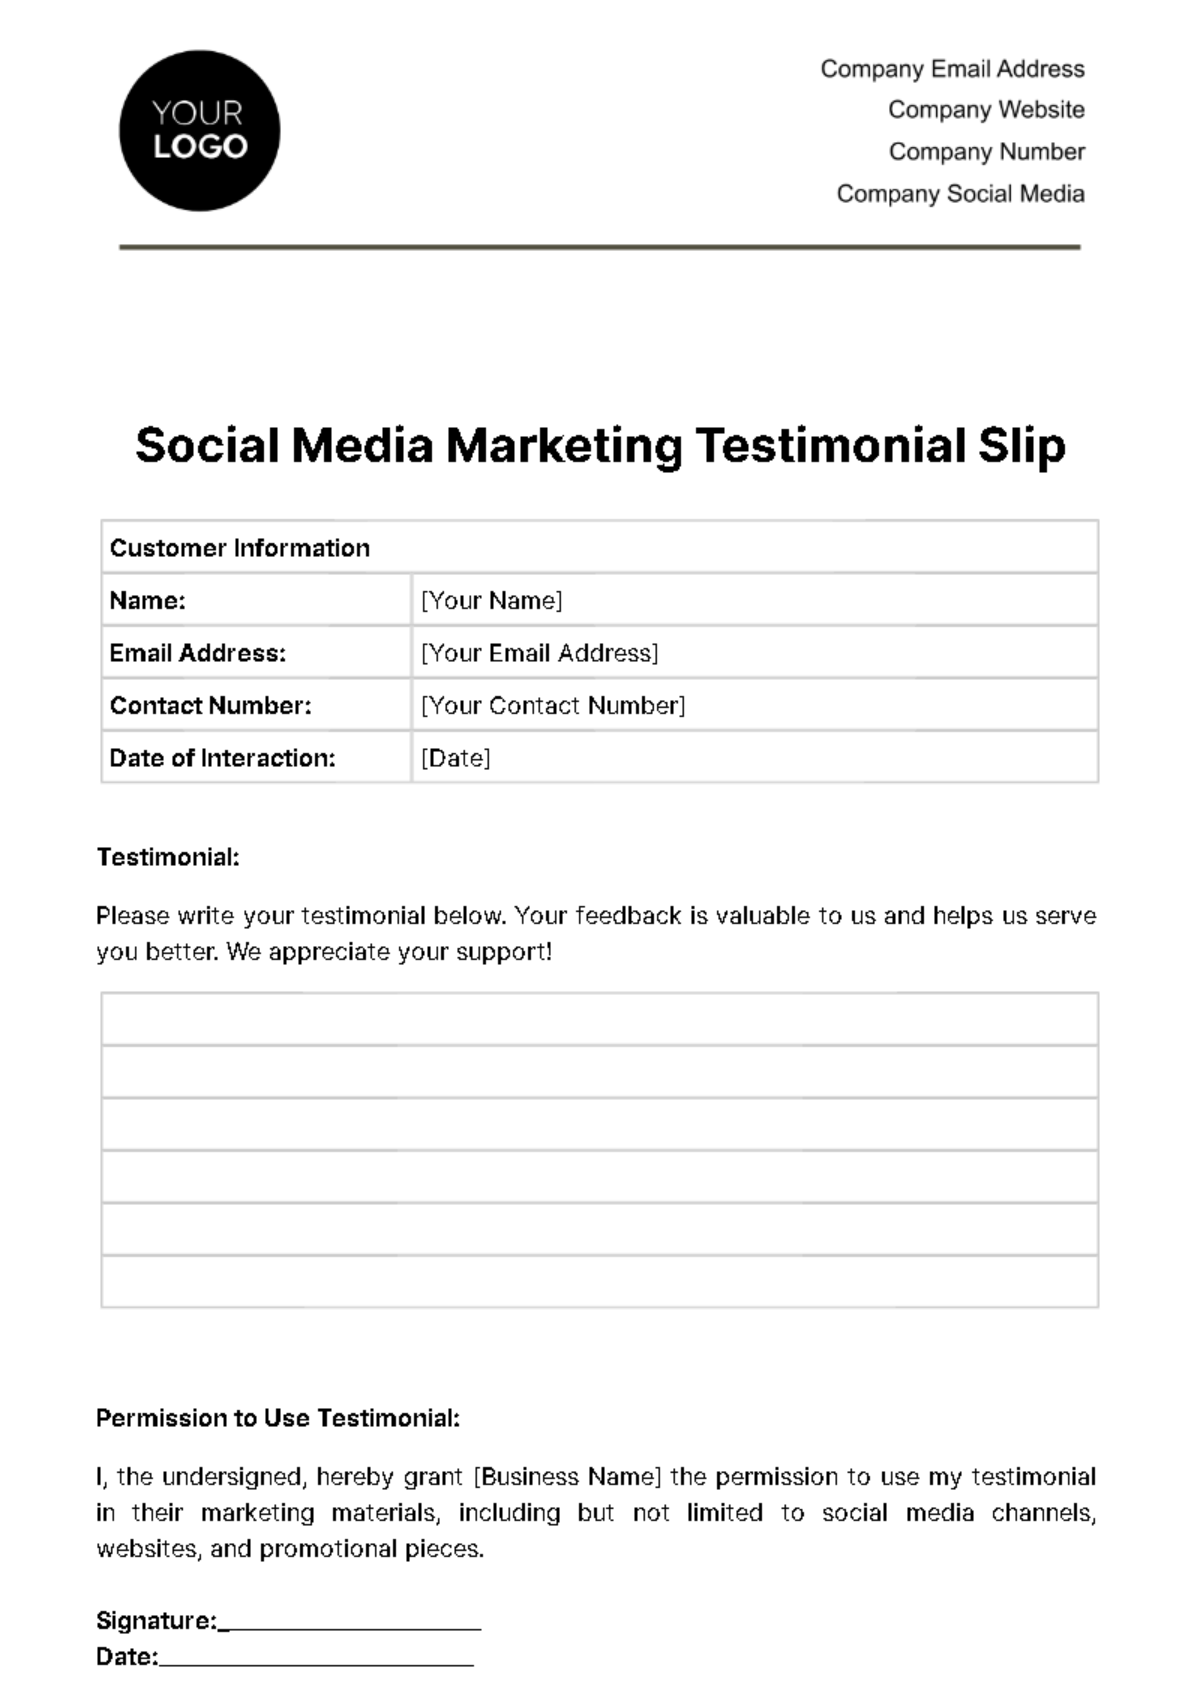 Social Media Marketing Testimonial Slip Template